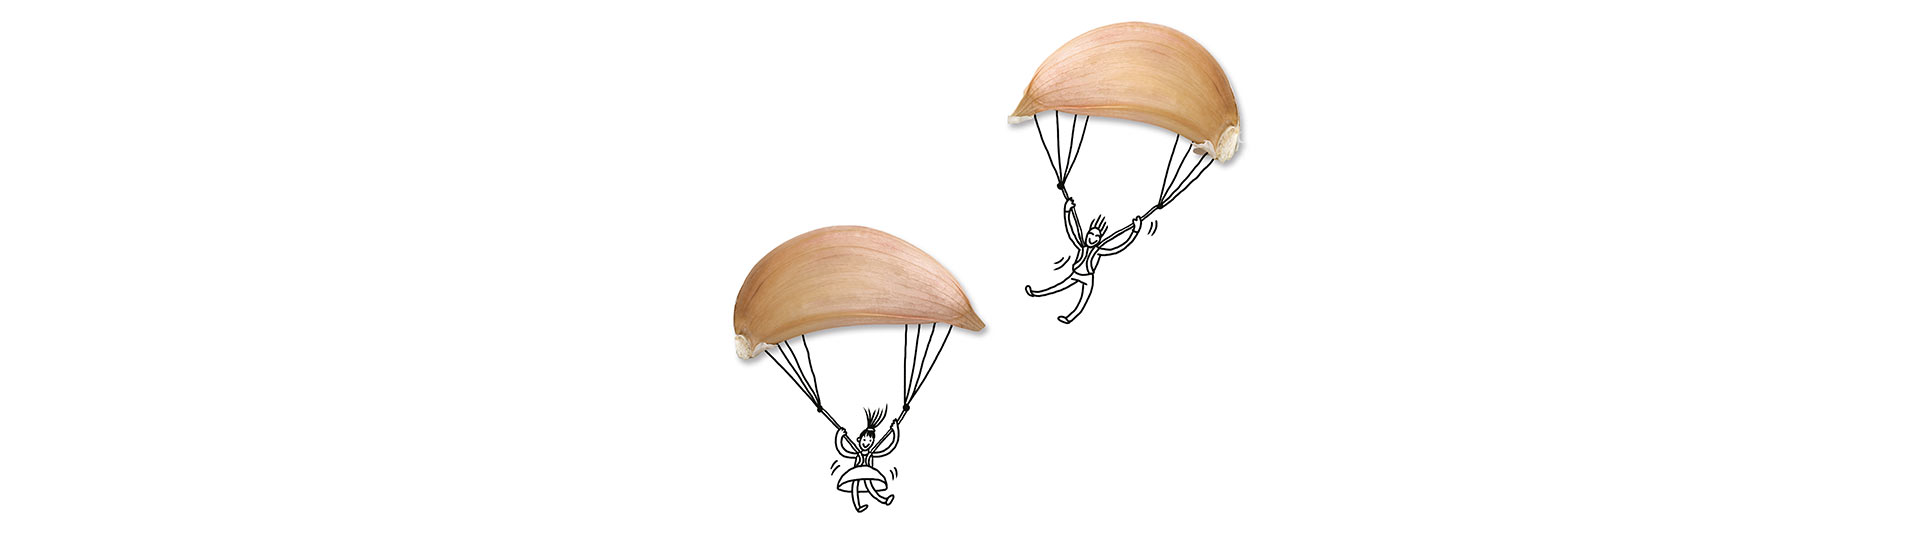 Fallschirme aus Knoblauchschalen